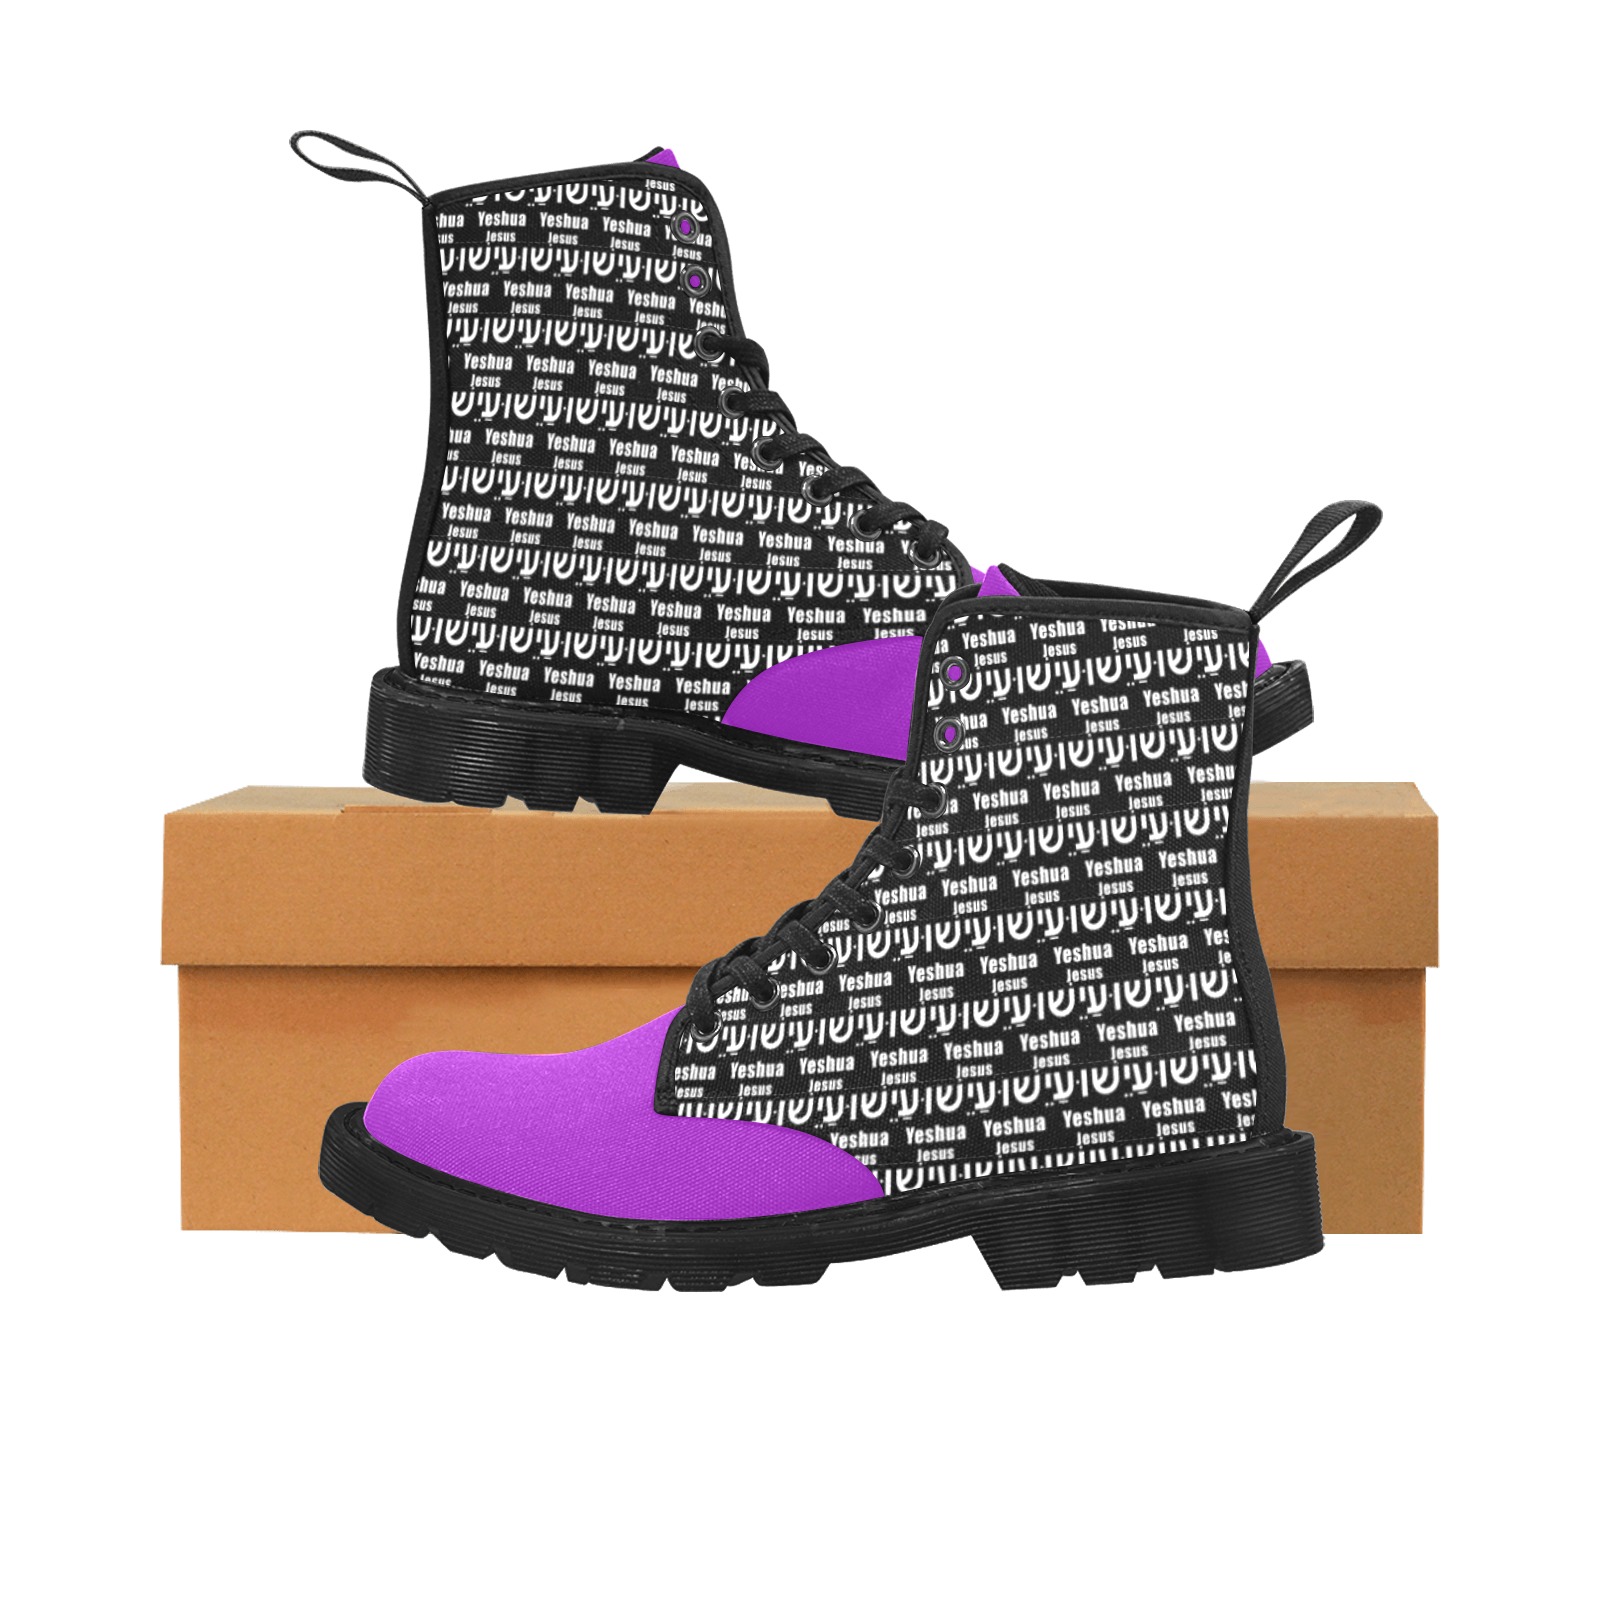 Yeshua Purple Top Boots Women Martin Boots for Women (Black) (Model 1203H)